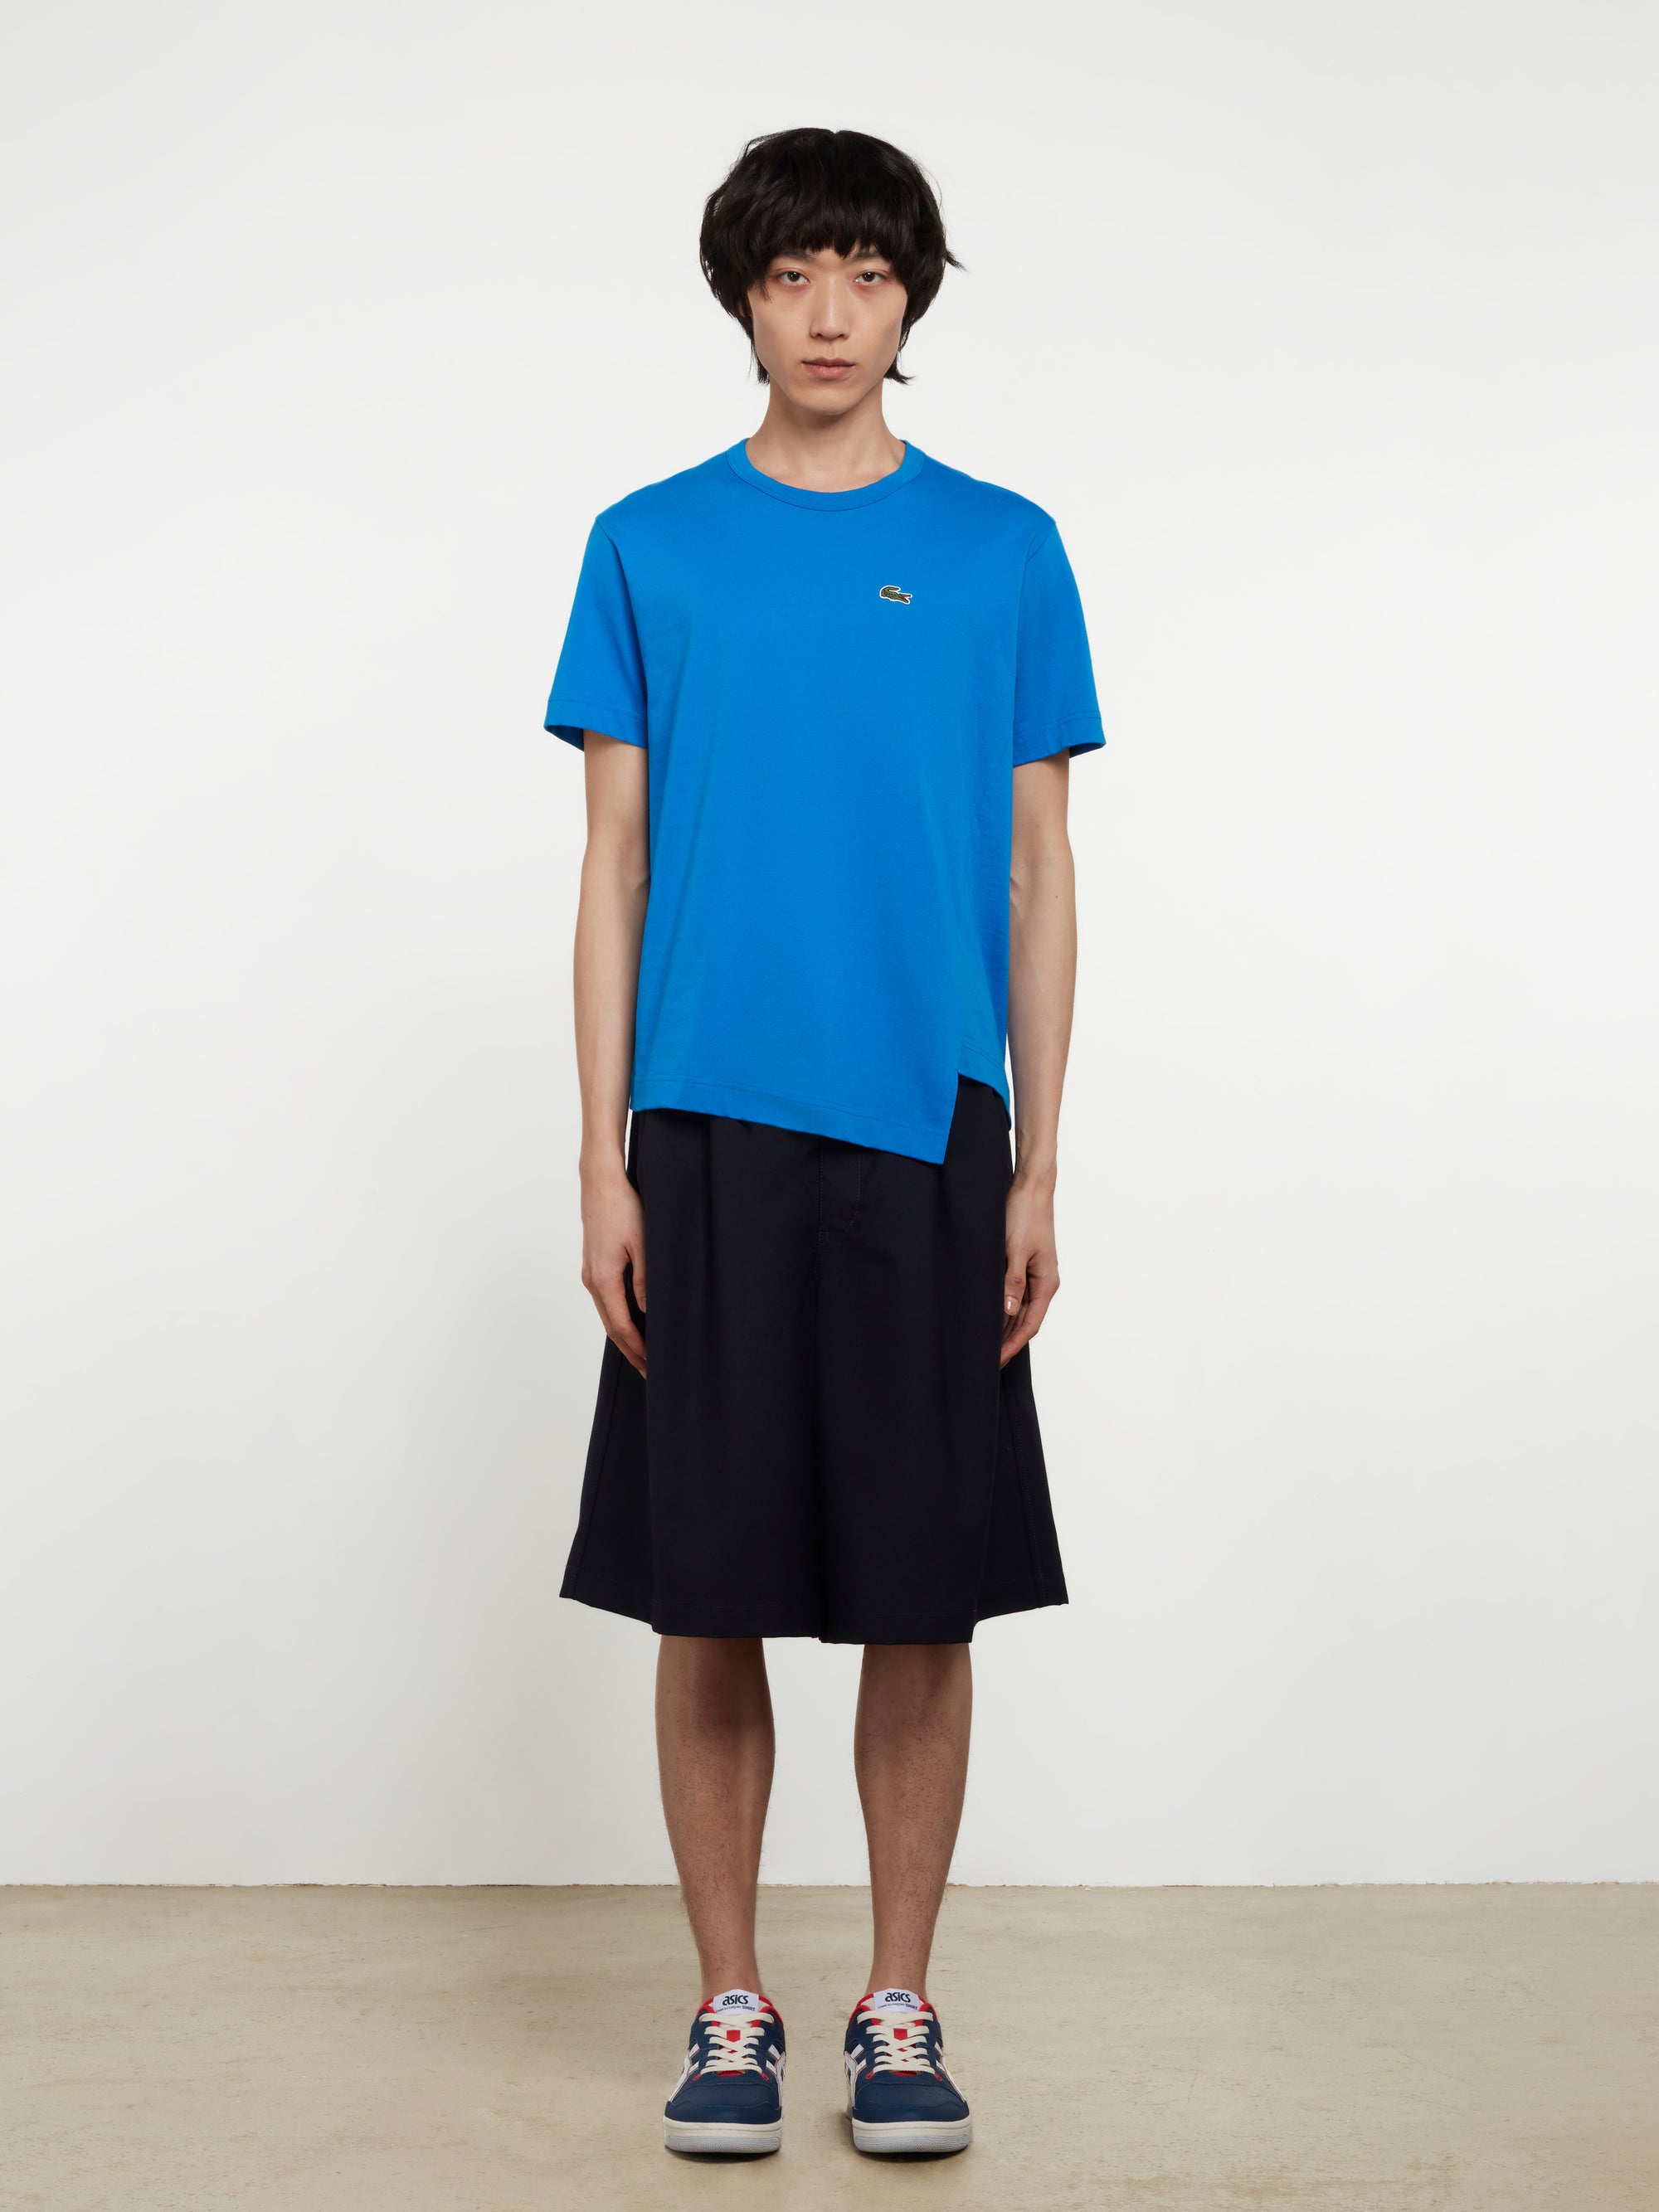 CDG Shirt - Lacoste Men’s T-Shirt - (Blue) view 4